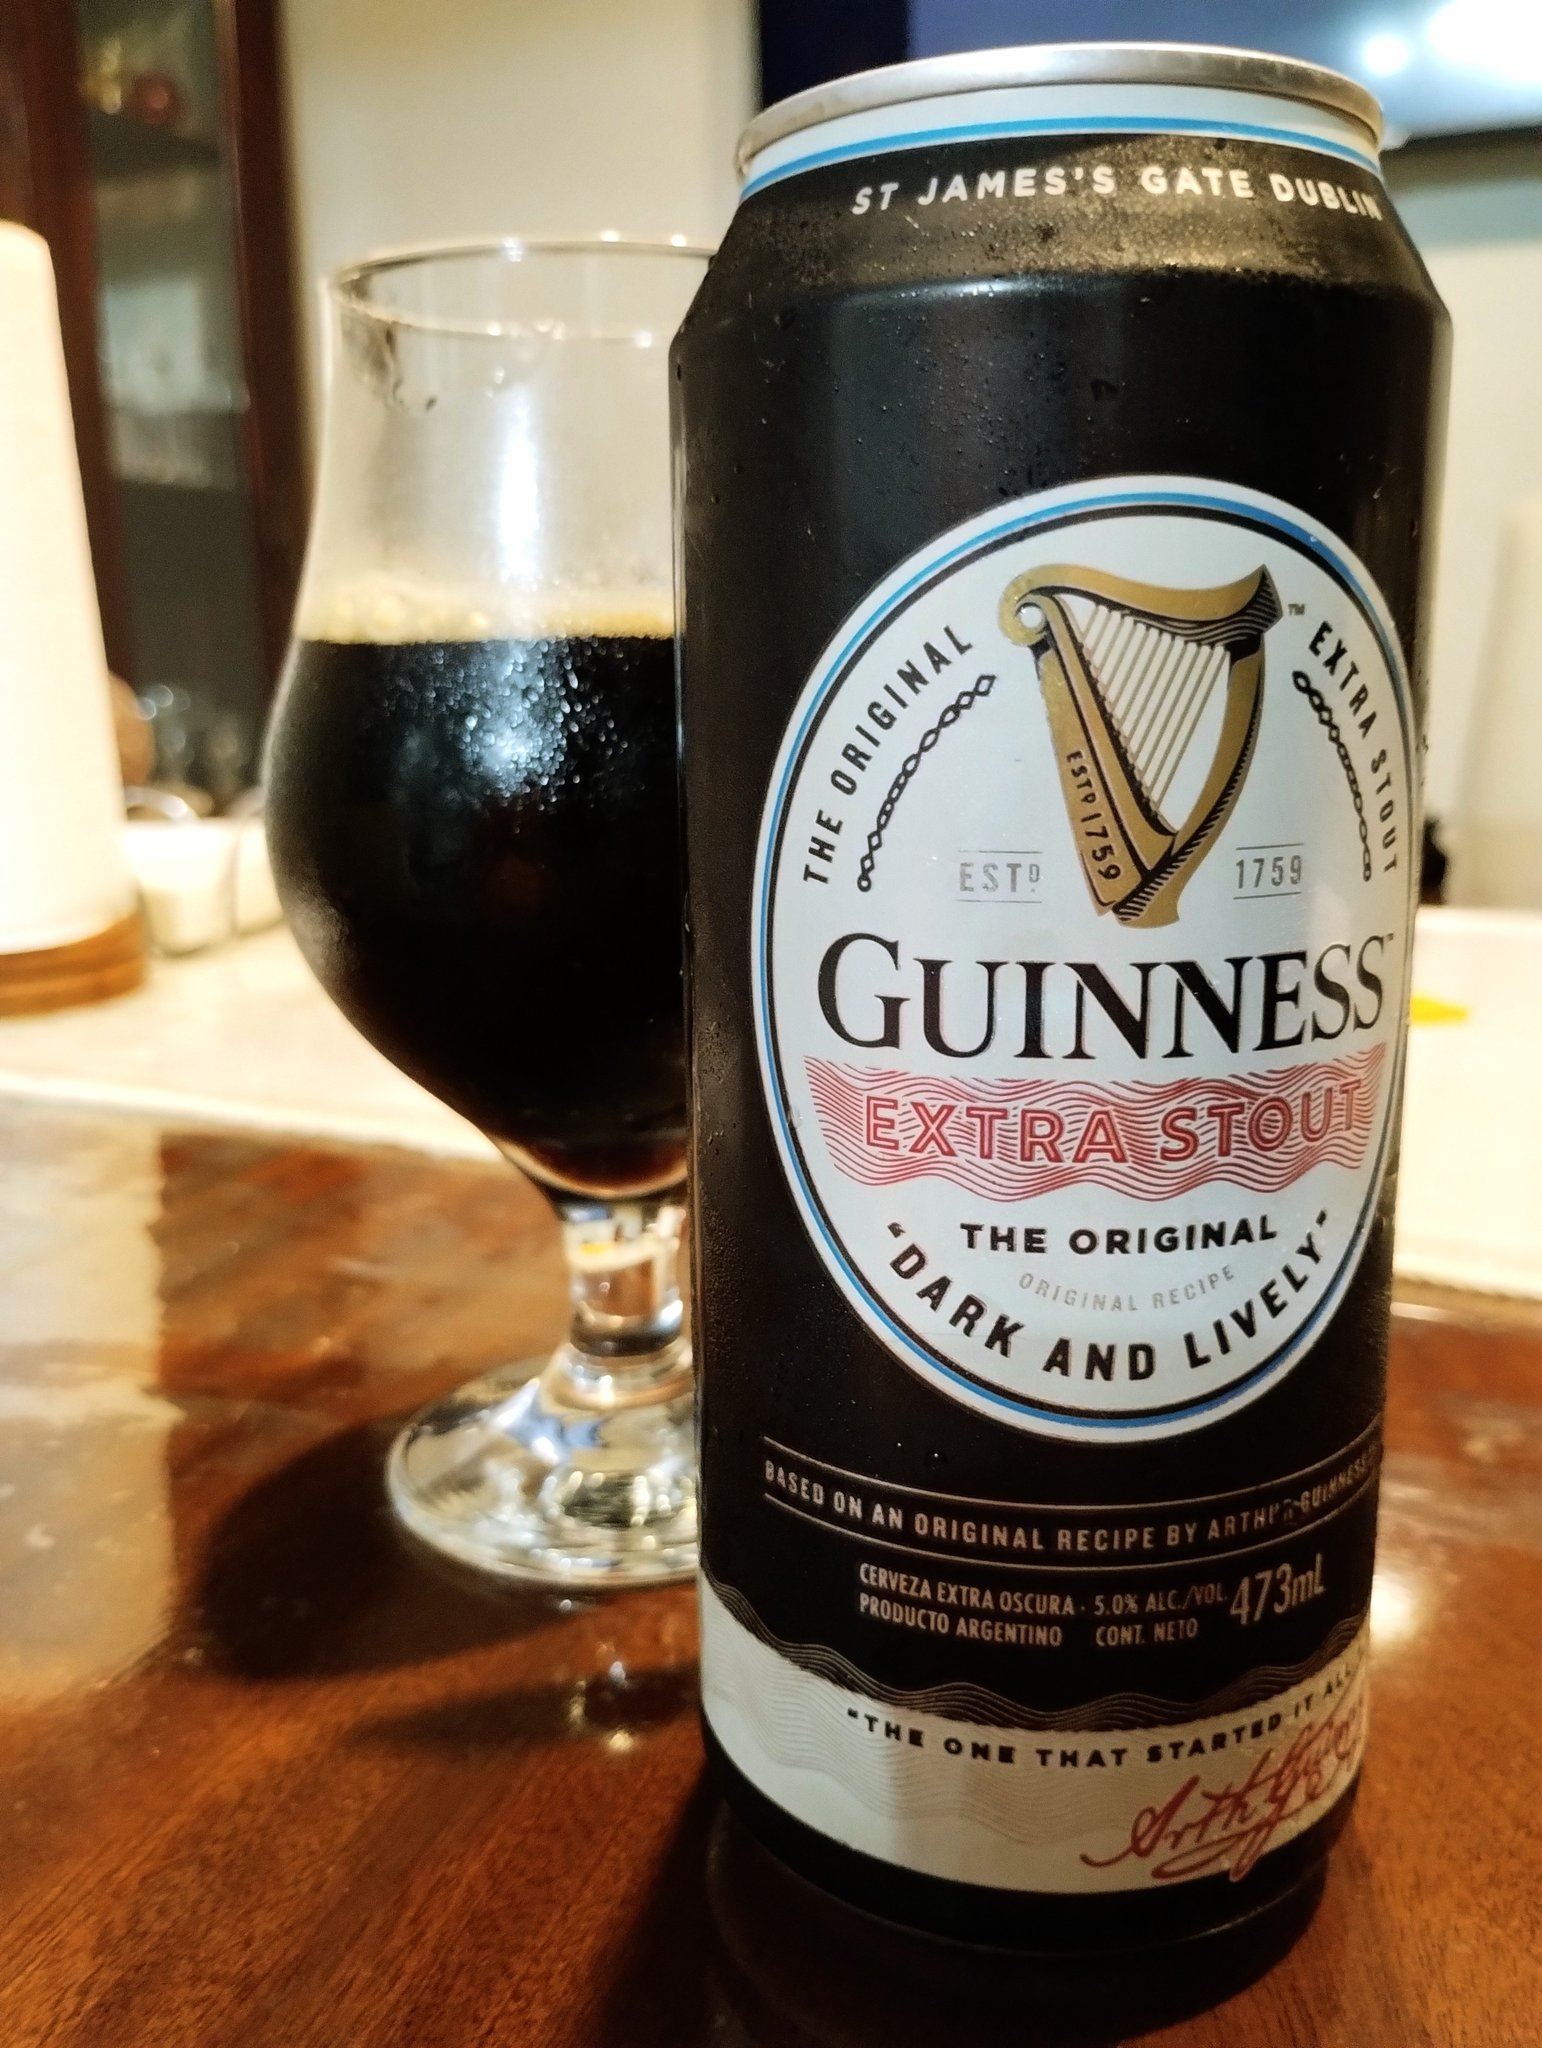 Cerveza Guinness Extra Stout 473 Ml - Jumbo